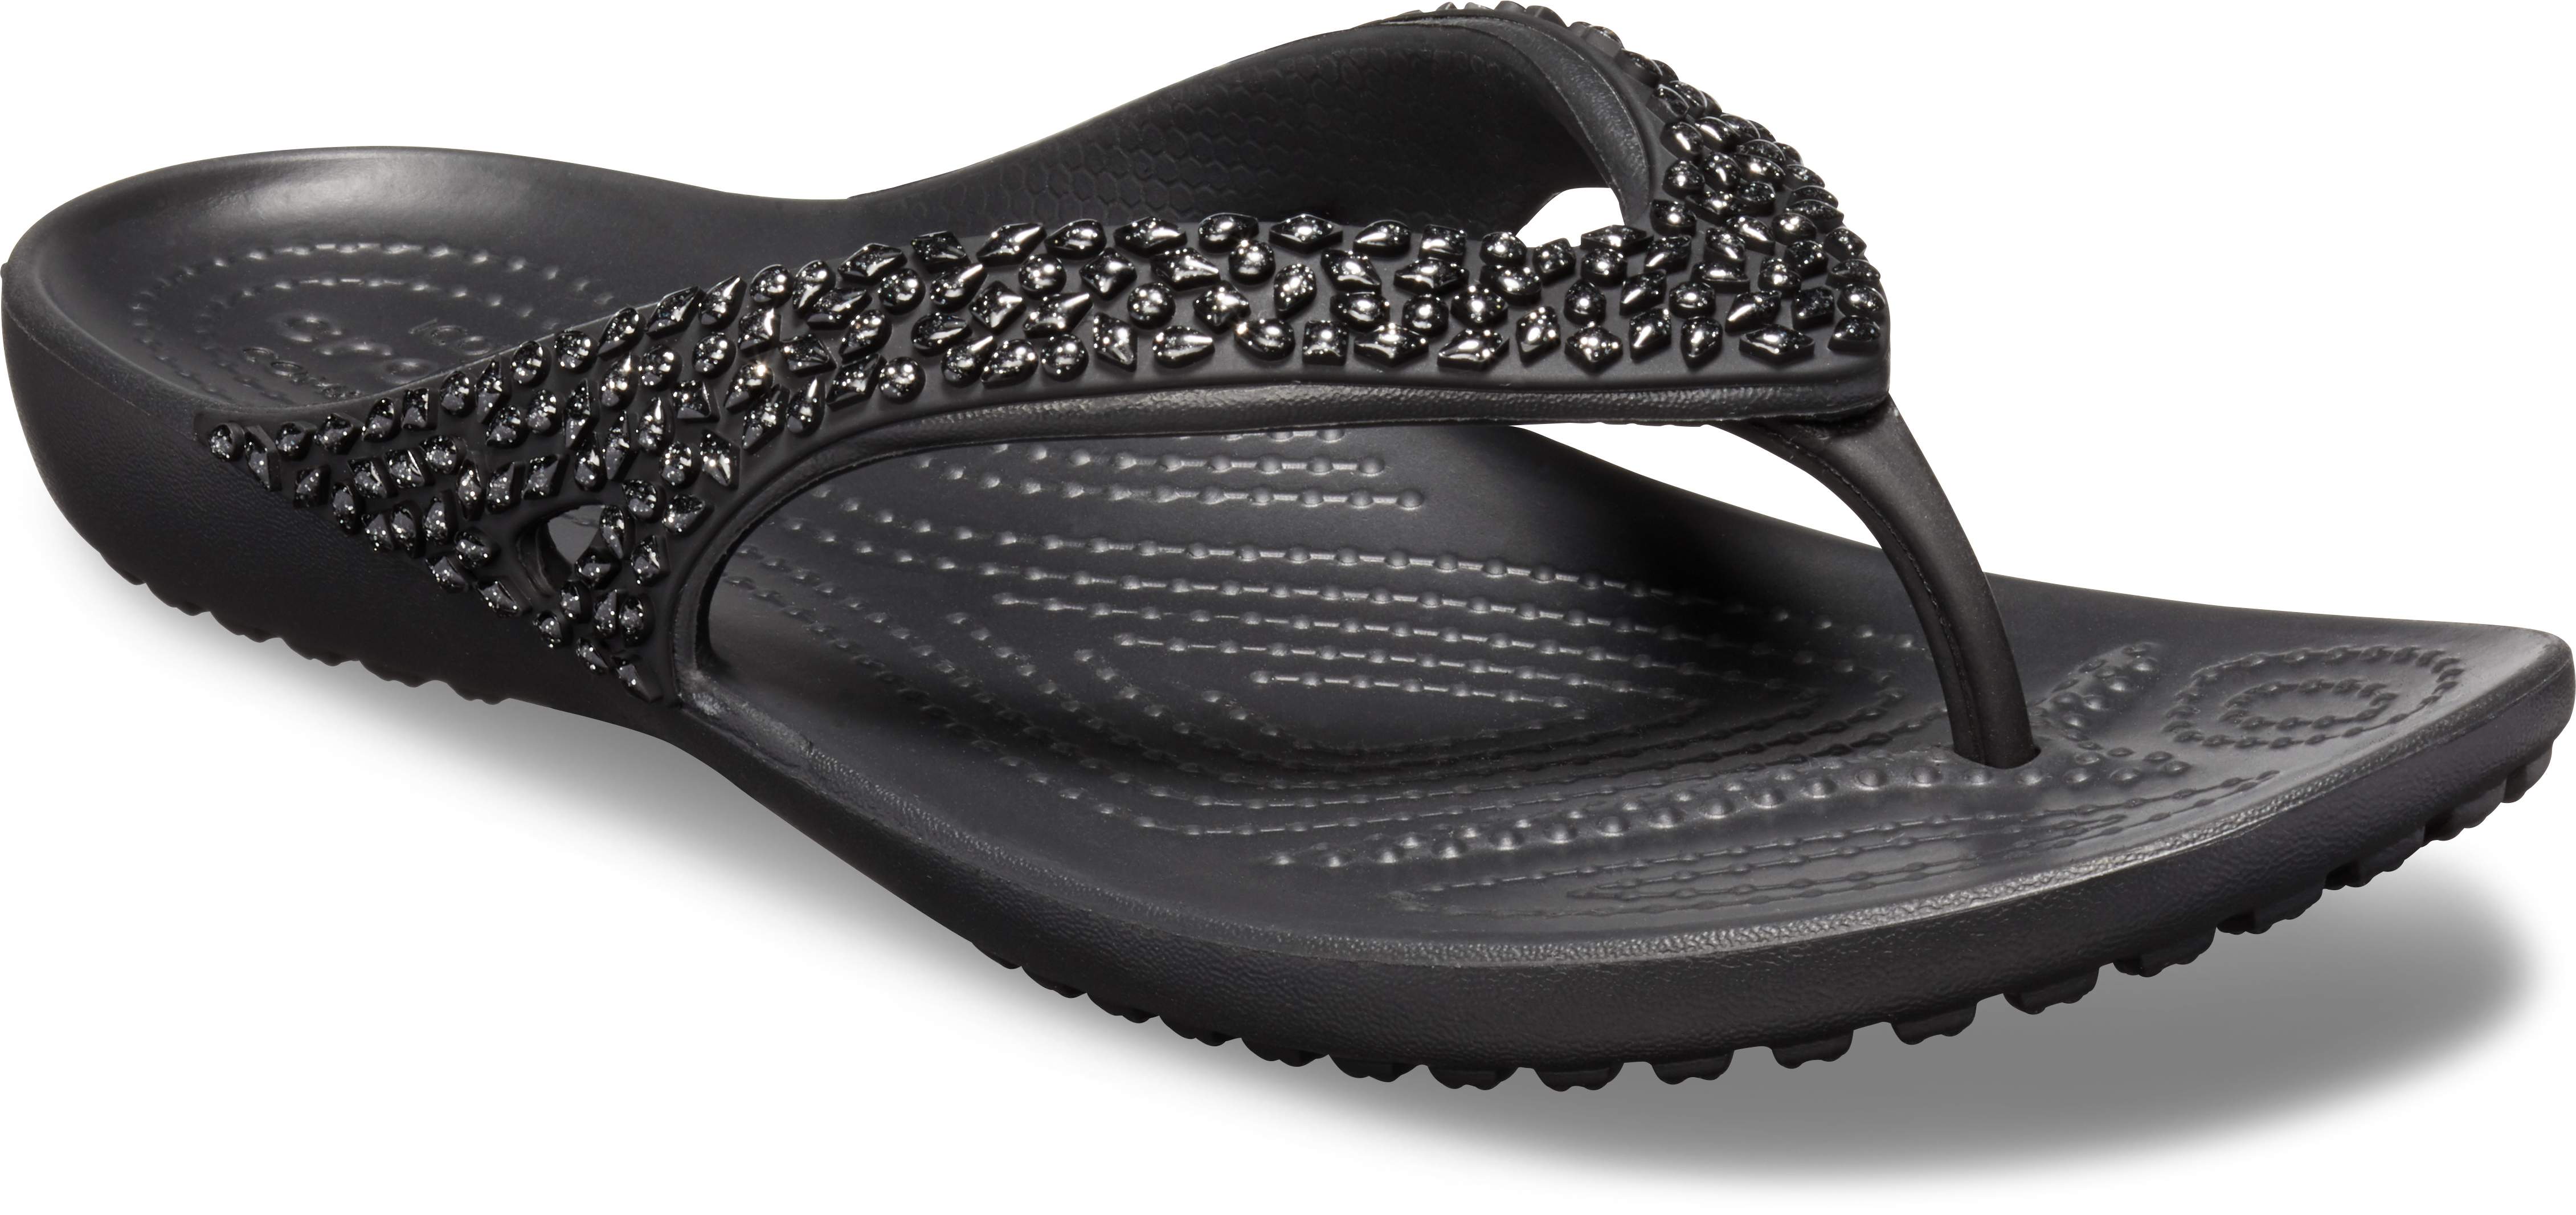 crocs kadee sandals